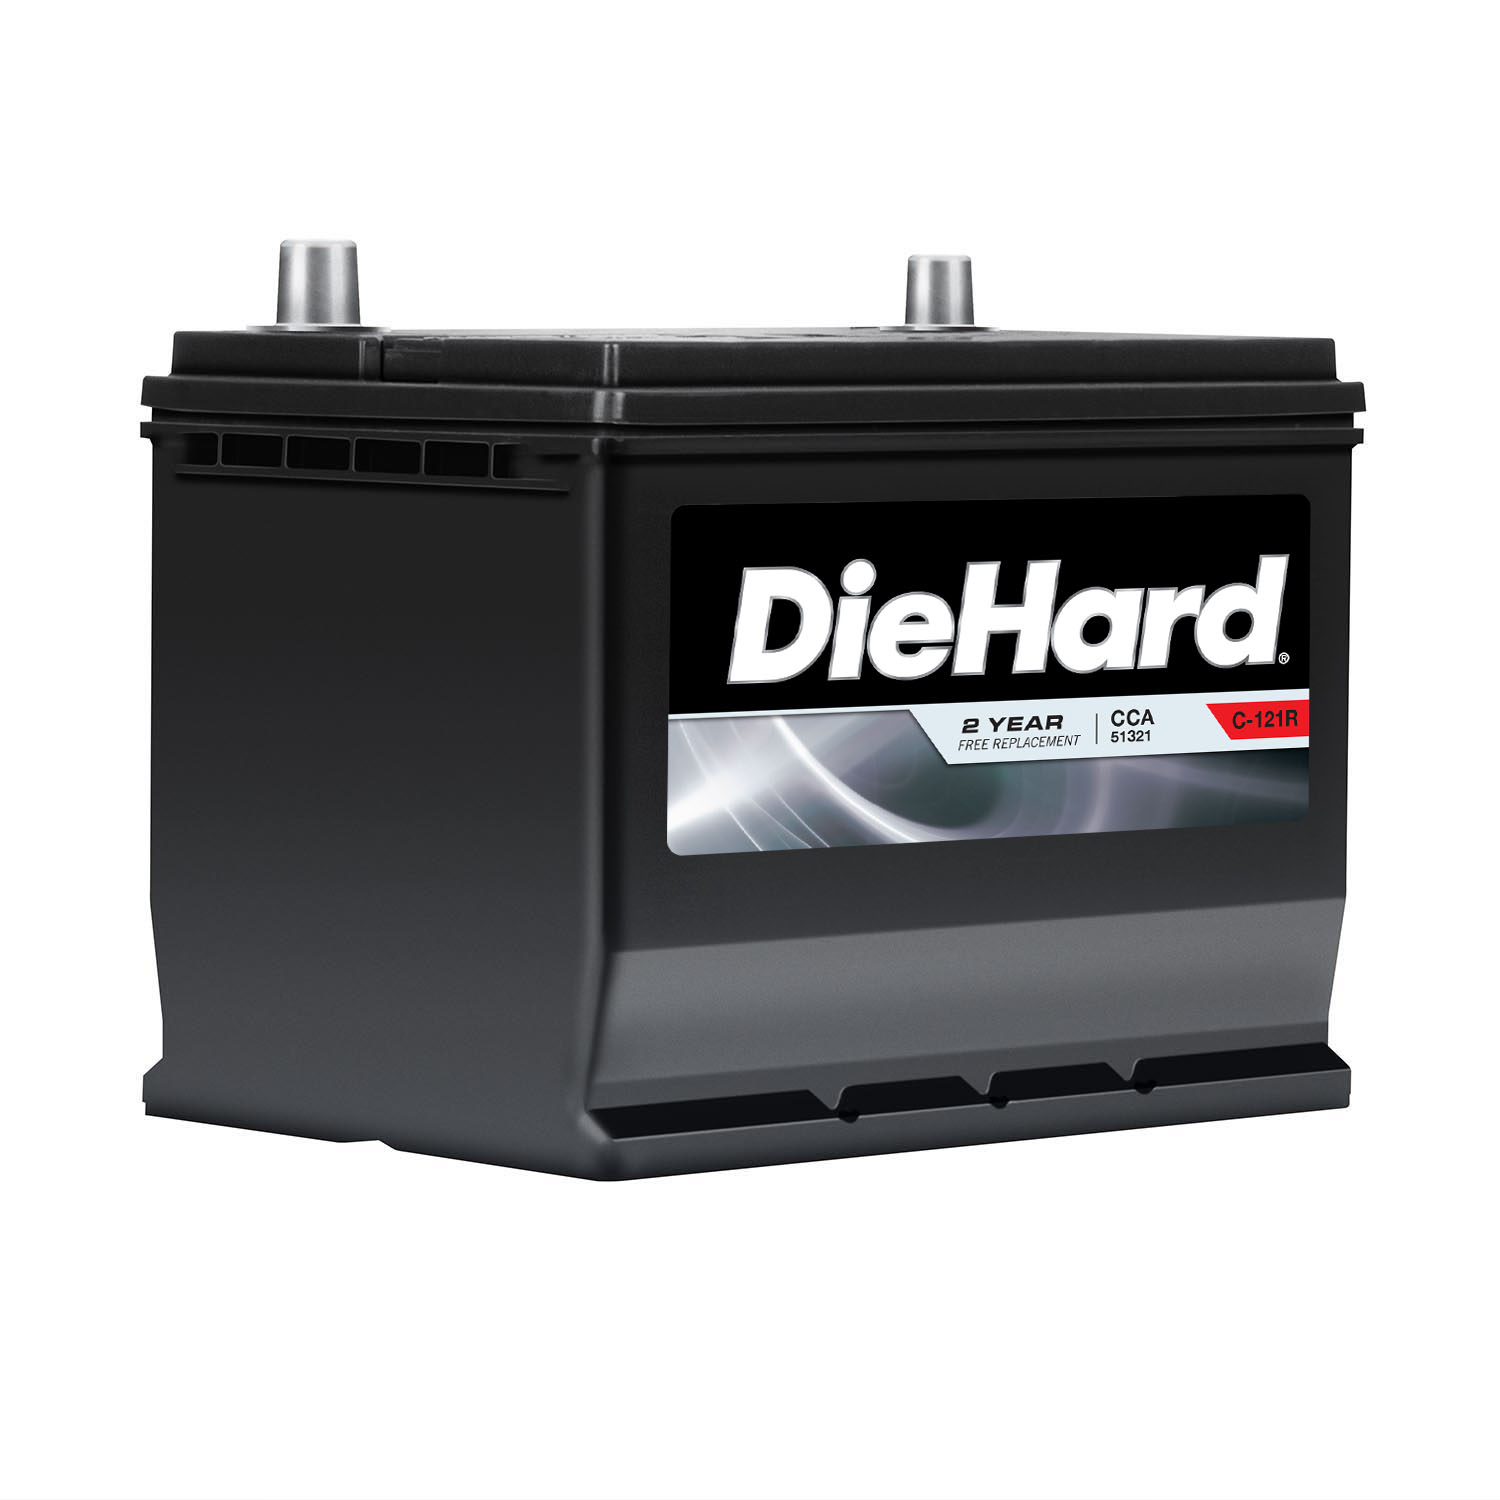 DieHard Automotive Battery - Group Size JC-121R (Price with Exchange)